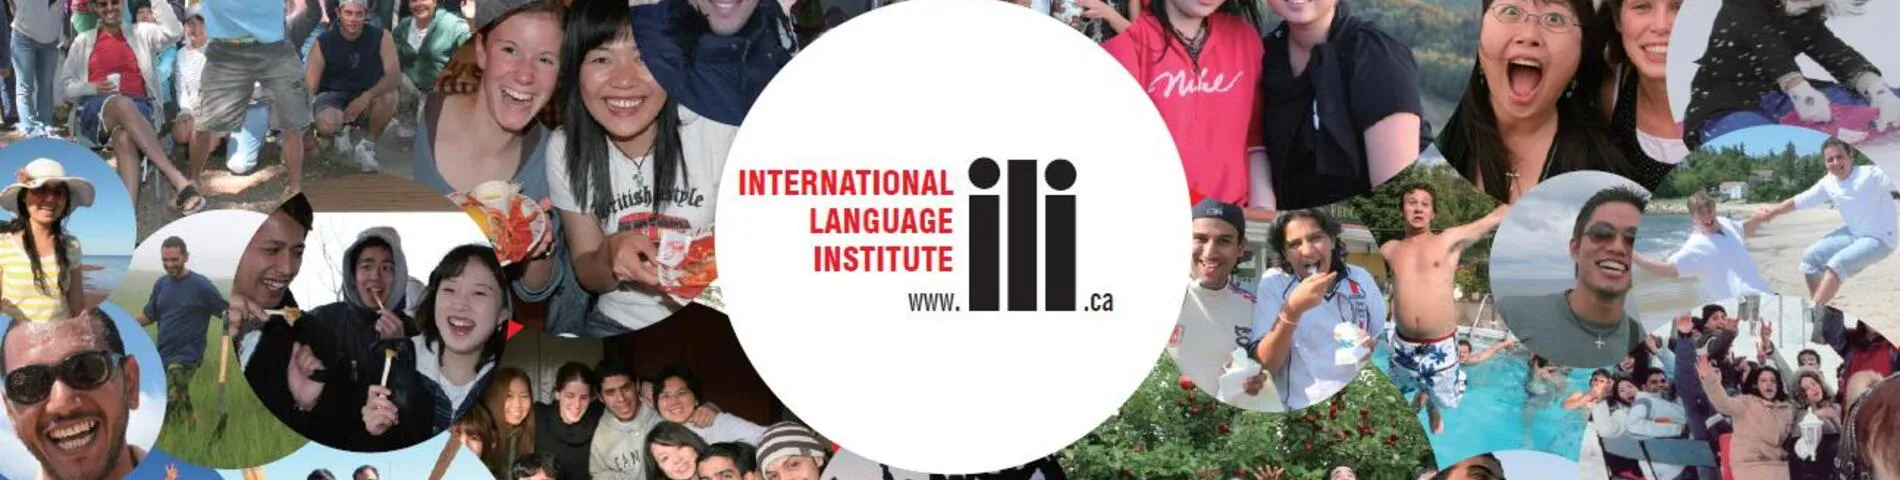 ILI - International Language Institute immagine 1